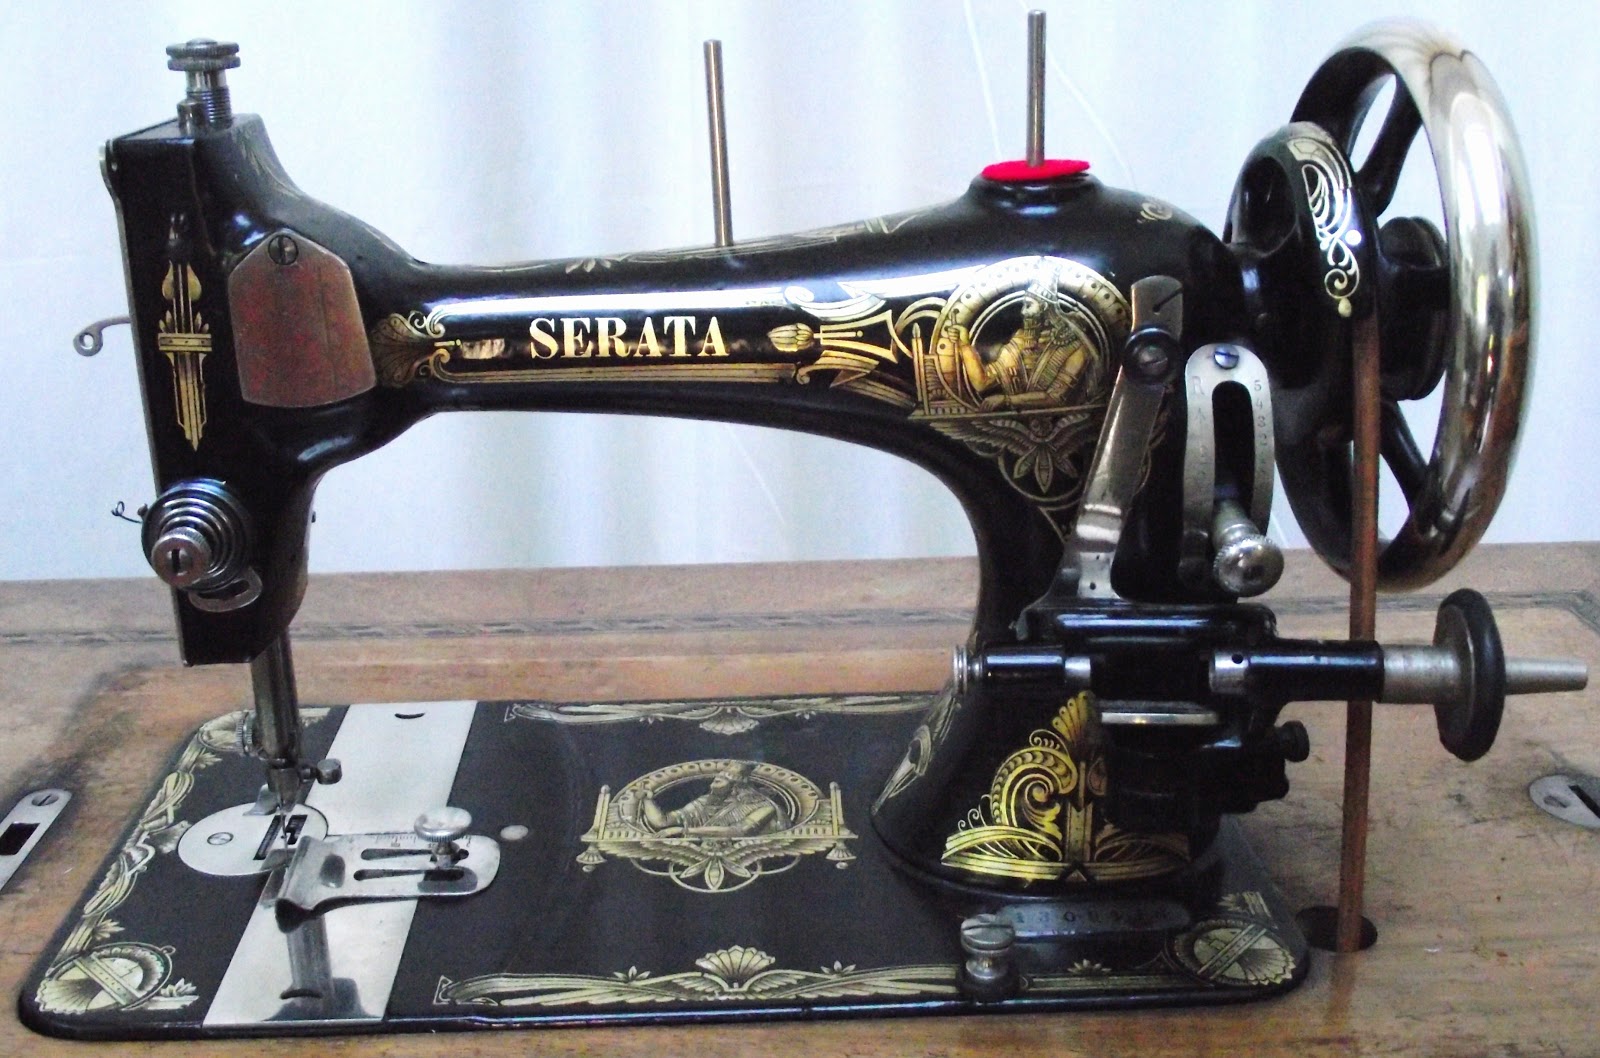 Швейная машинка stoewer 32. Stoewer швейная машина. Бернхард Штевер швейная машинка. Швейная машина Stoewer MS-32. Швейная ножная машина Stoewer.